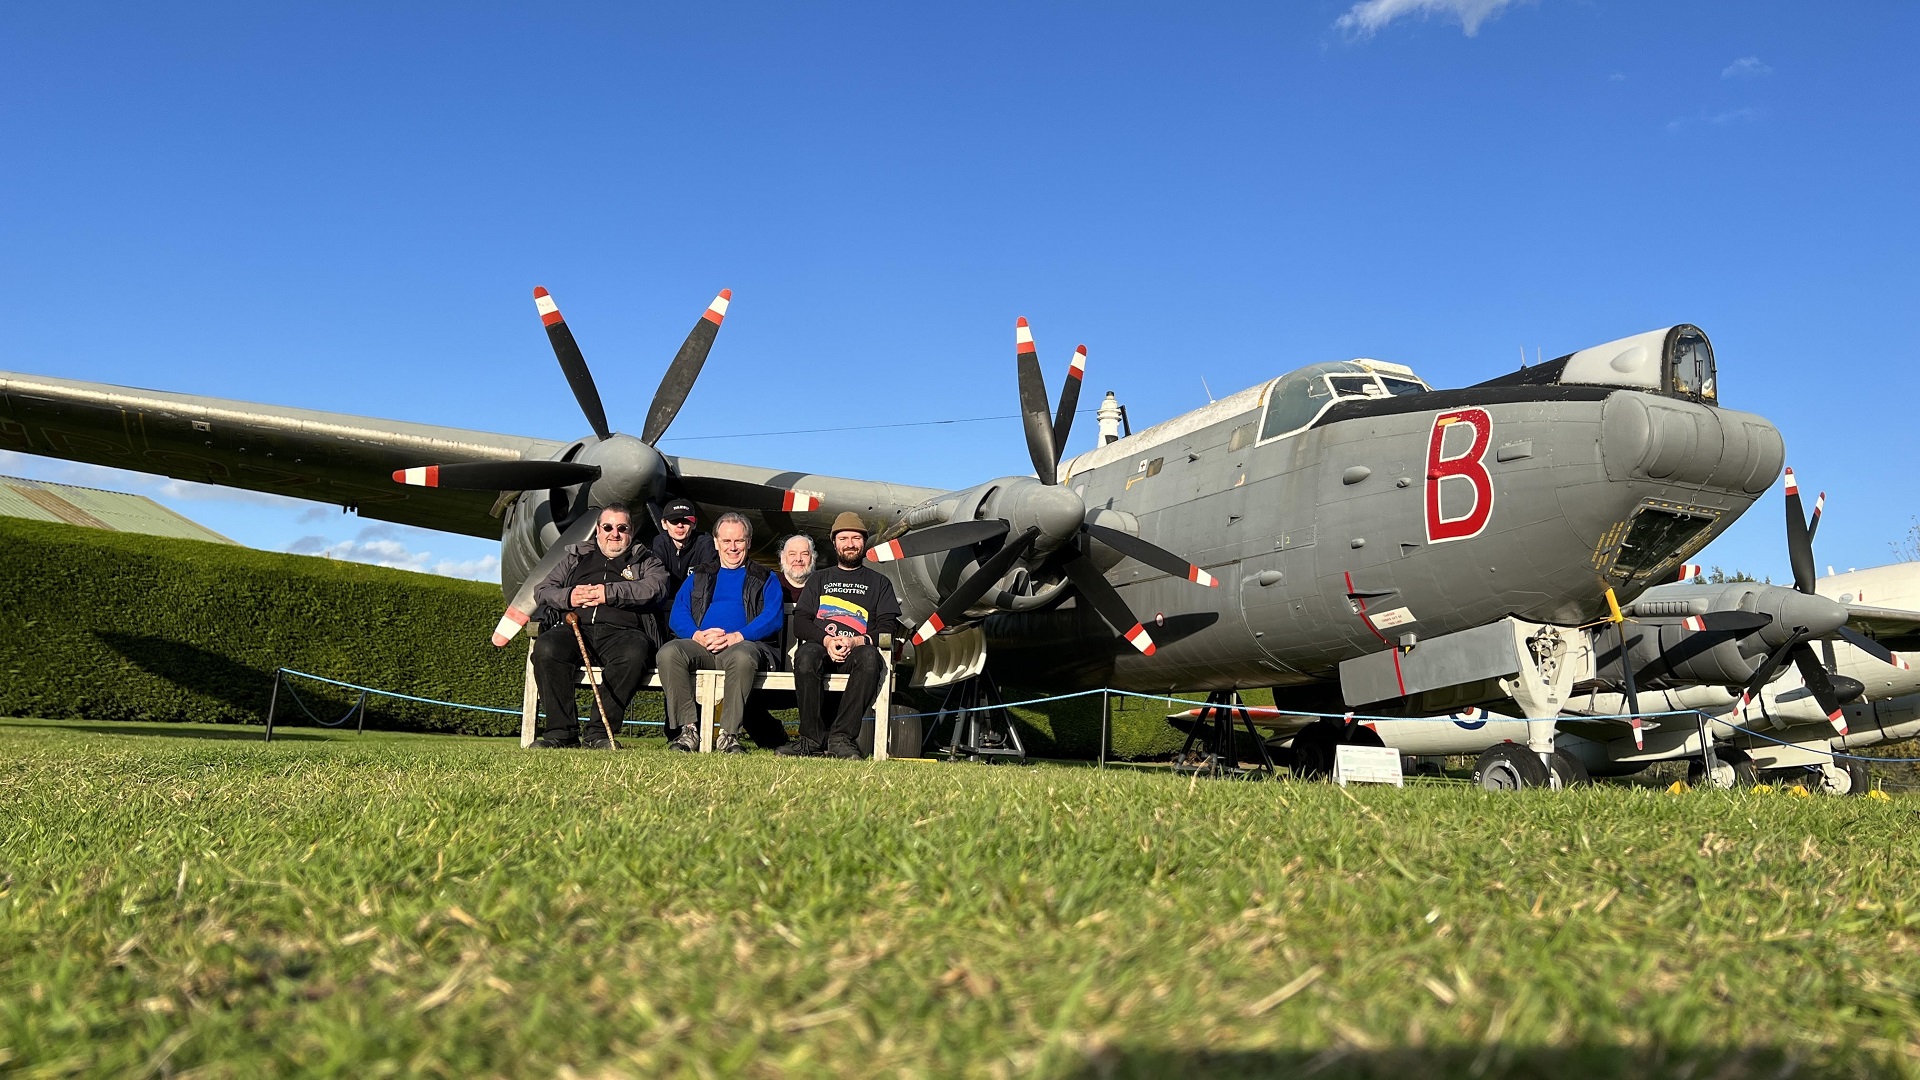 Club members in front of the Newark Air Museum Shackleton